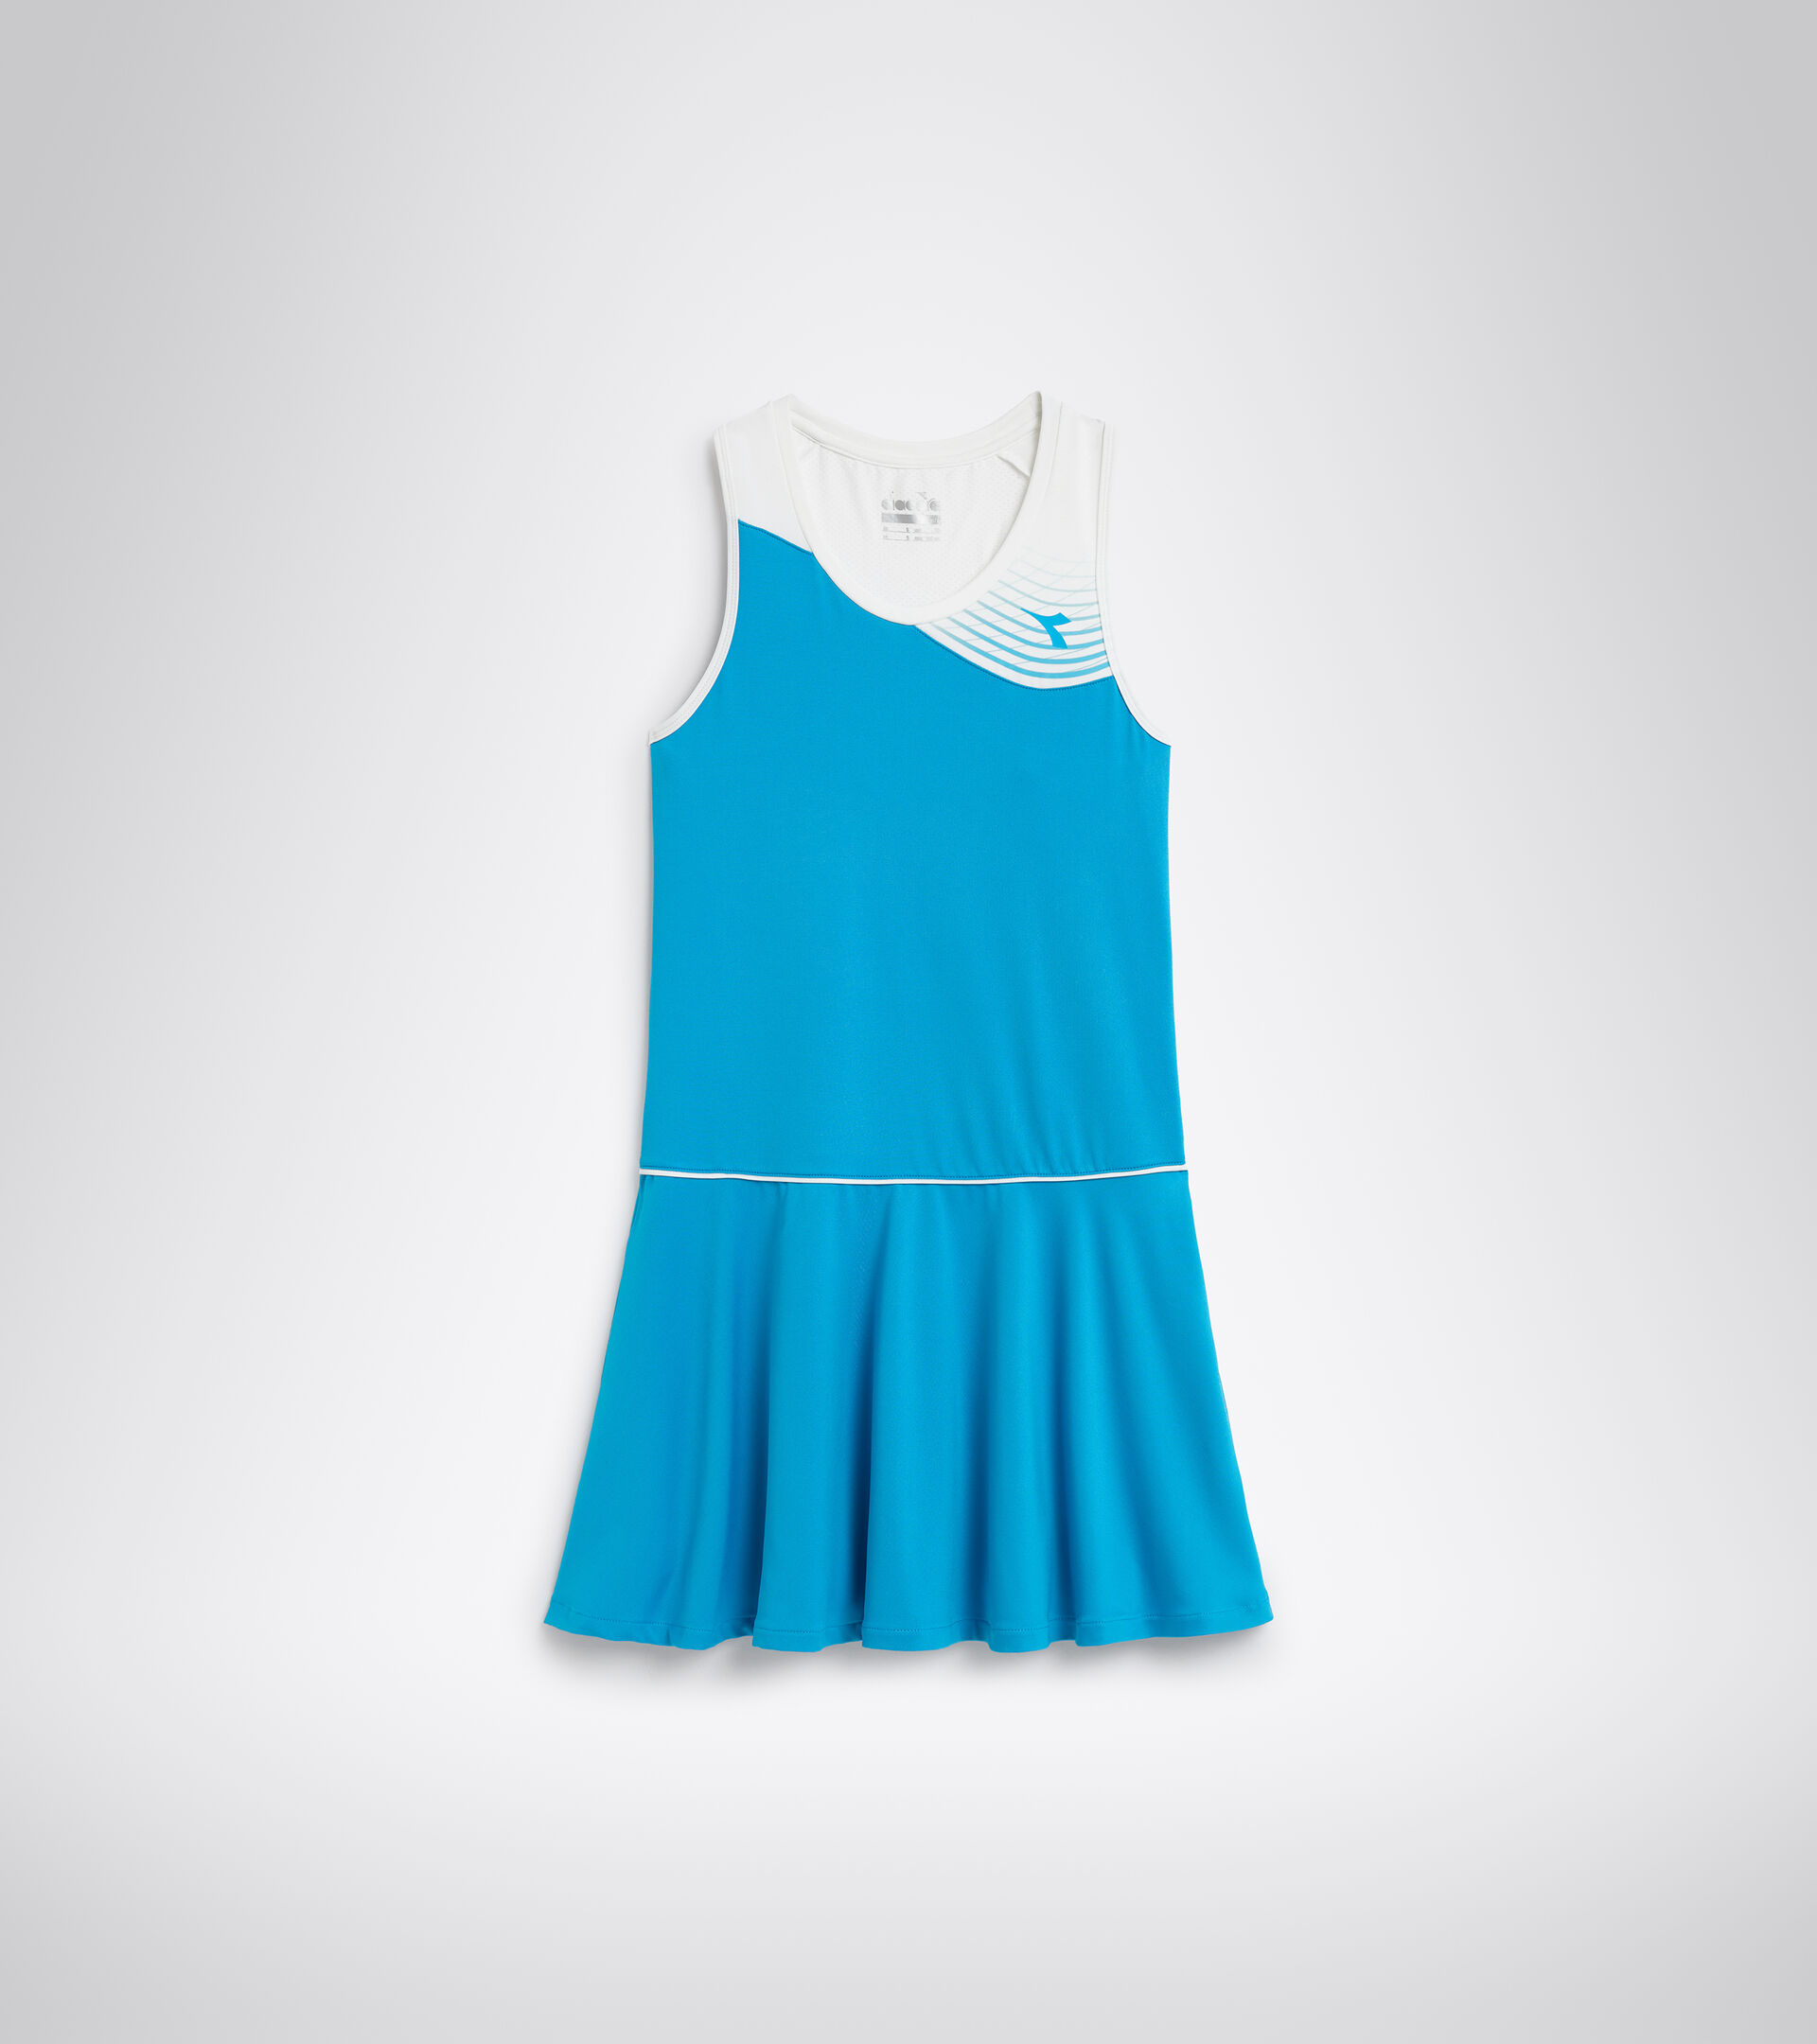 Damen-Tennis-Outfit L. DRESS COURT KONIGSBLAU FLUO - Diadora